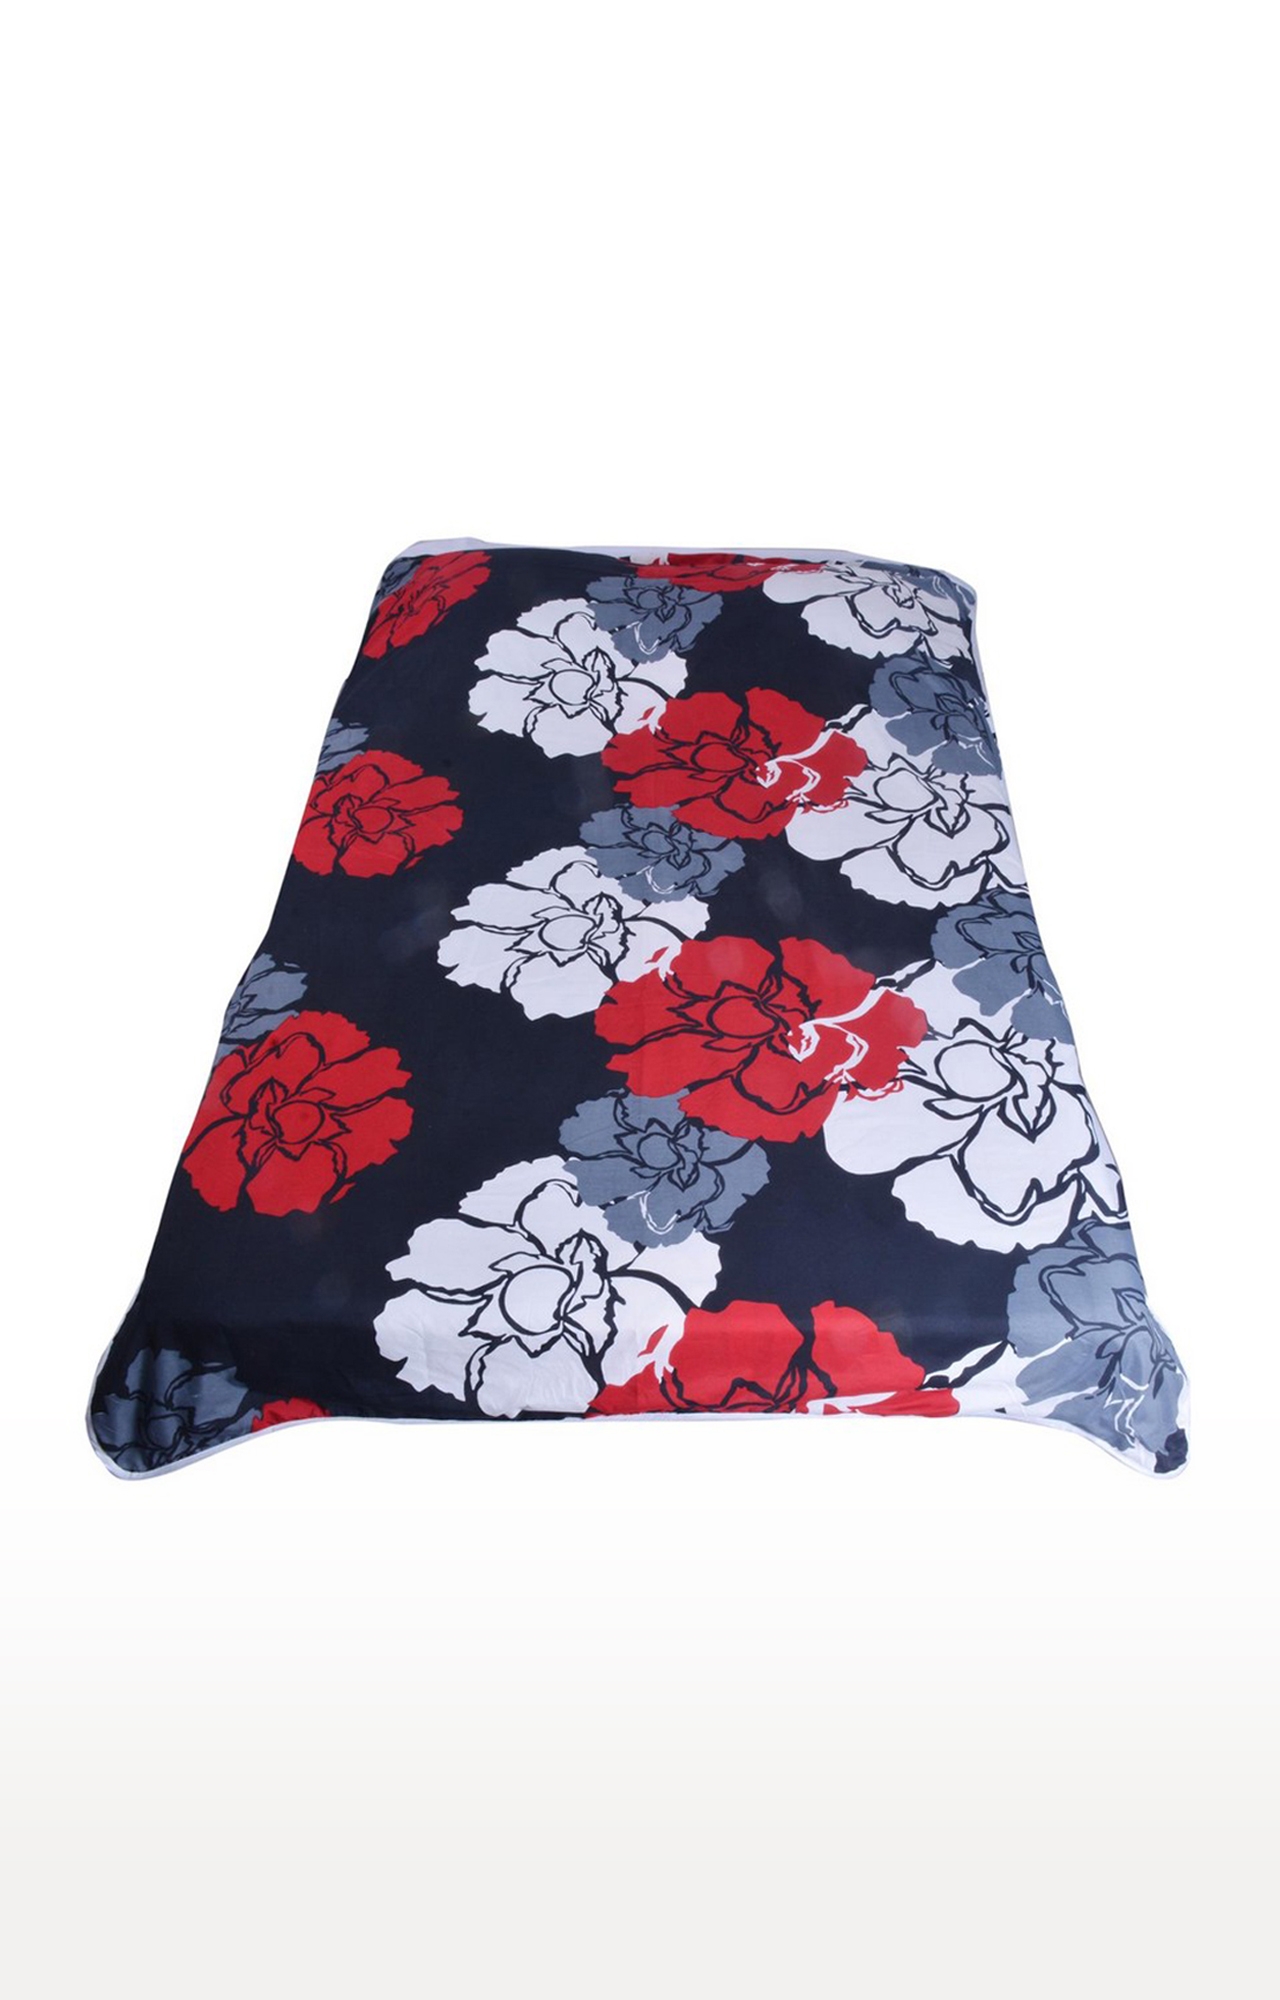 V Brown | Floral Printed Cotton 3 Layer Single Bed Quilt Dohar 1